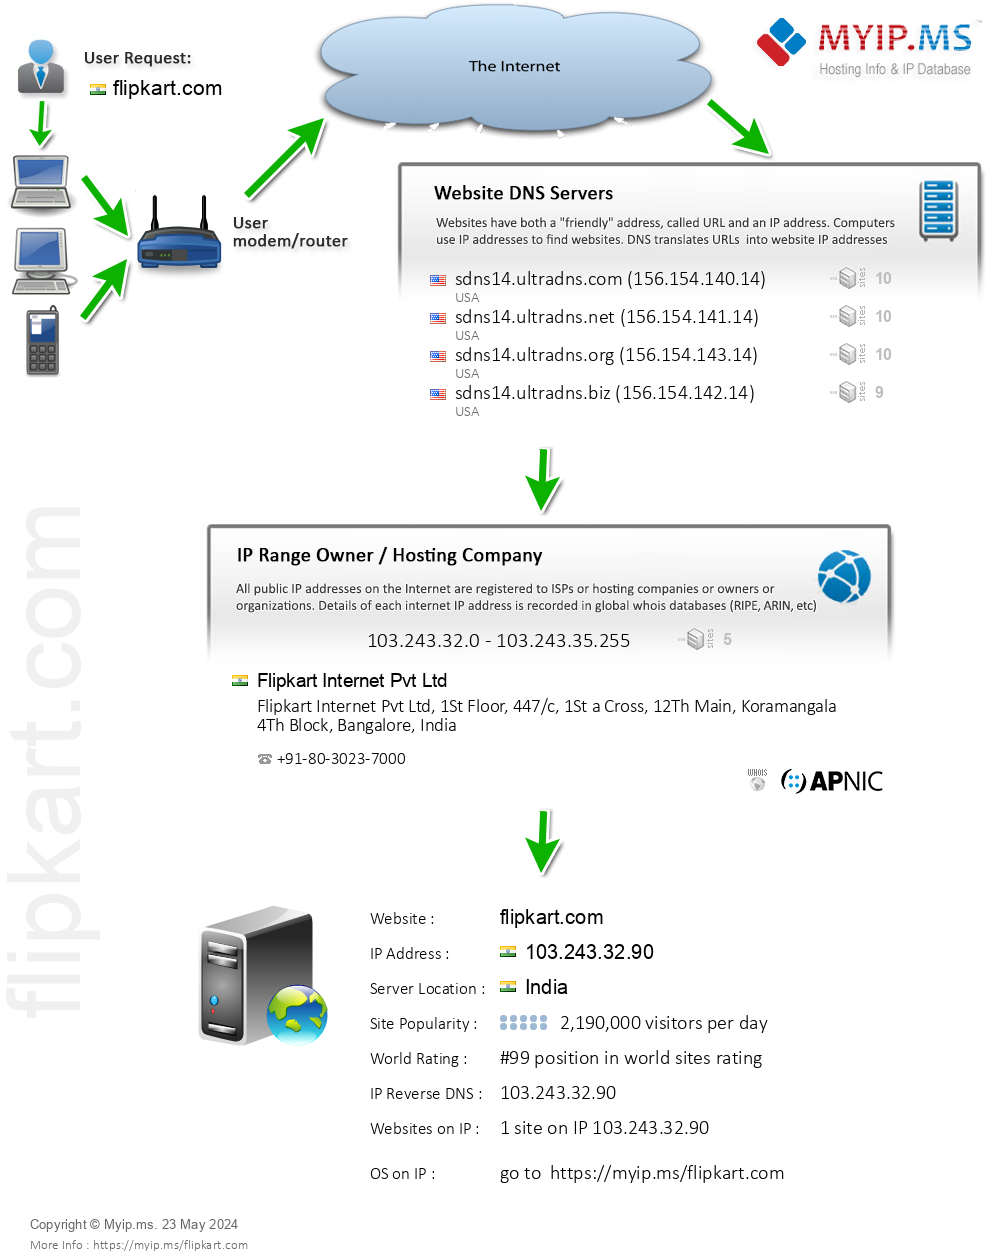 Flipkart.com - Website Hosting Visual IP Diagram